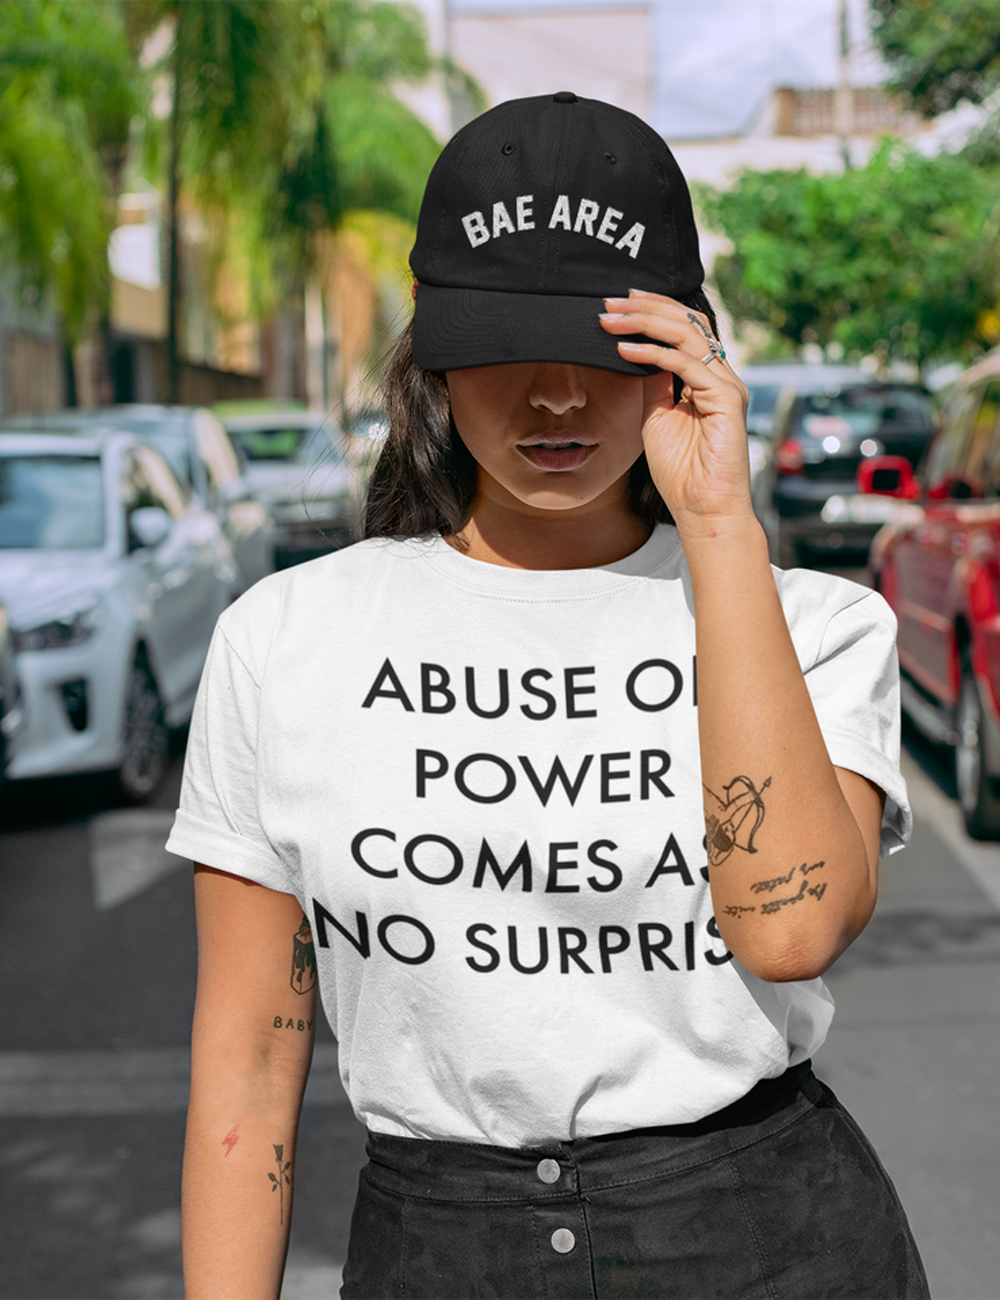 Abuse Of Power Comes As No Surprise Men's Classic T-Shirt OniTakai